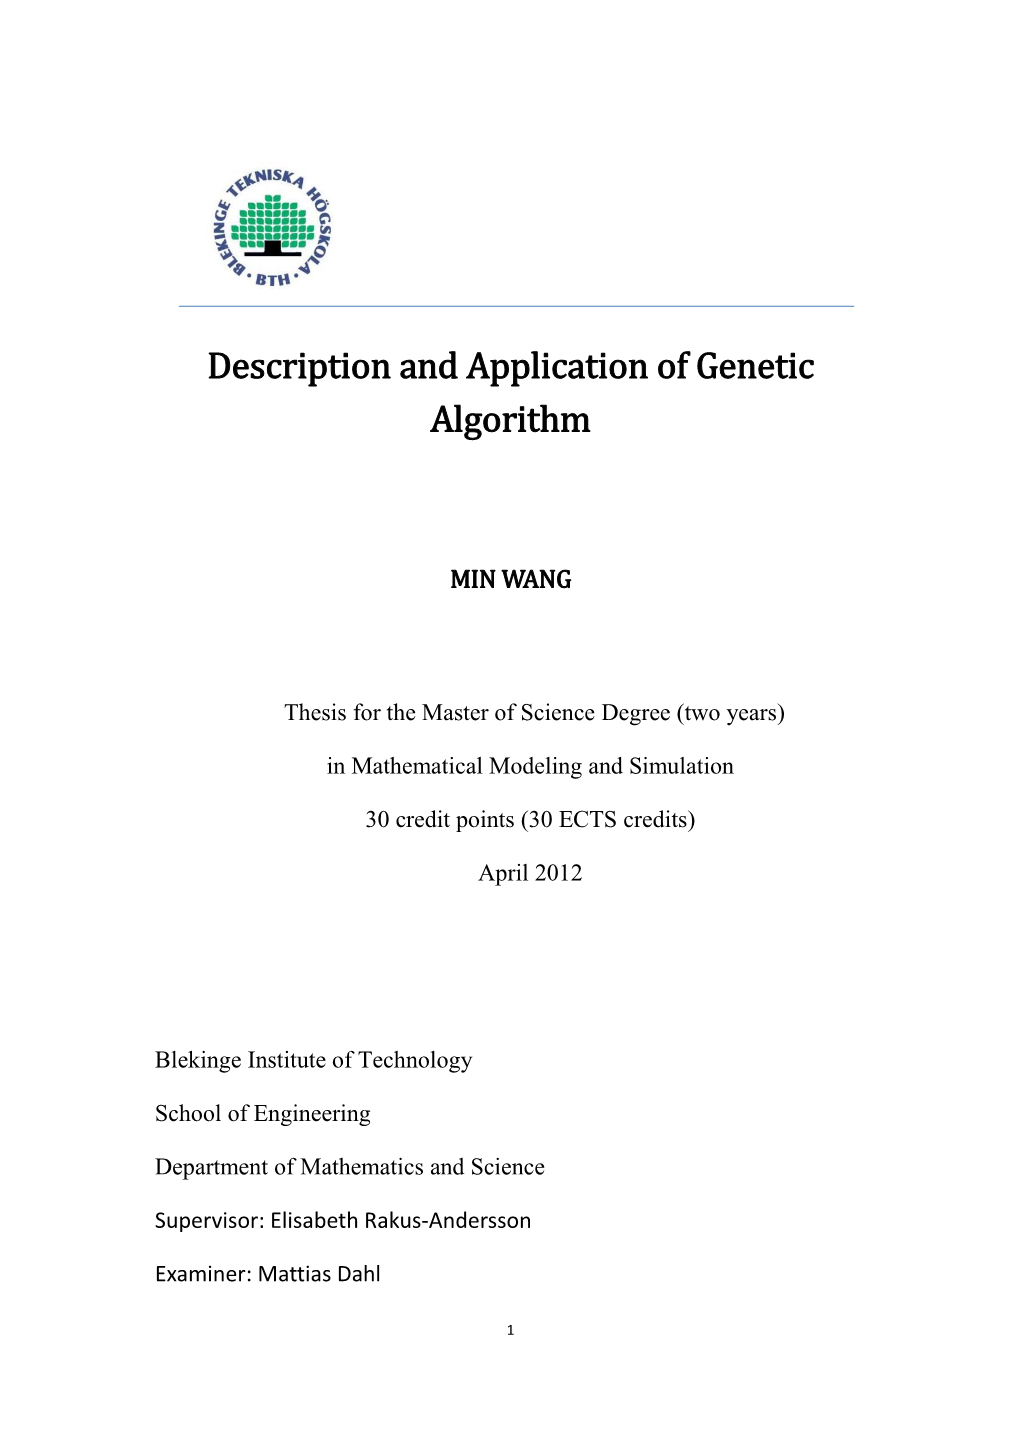 Description and Application of Genetic Algorithm